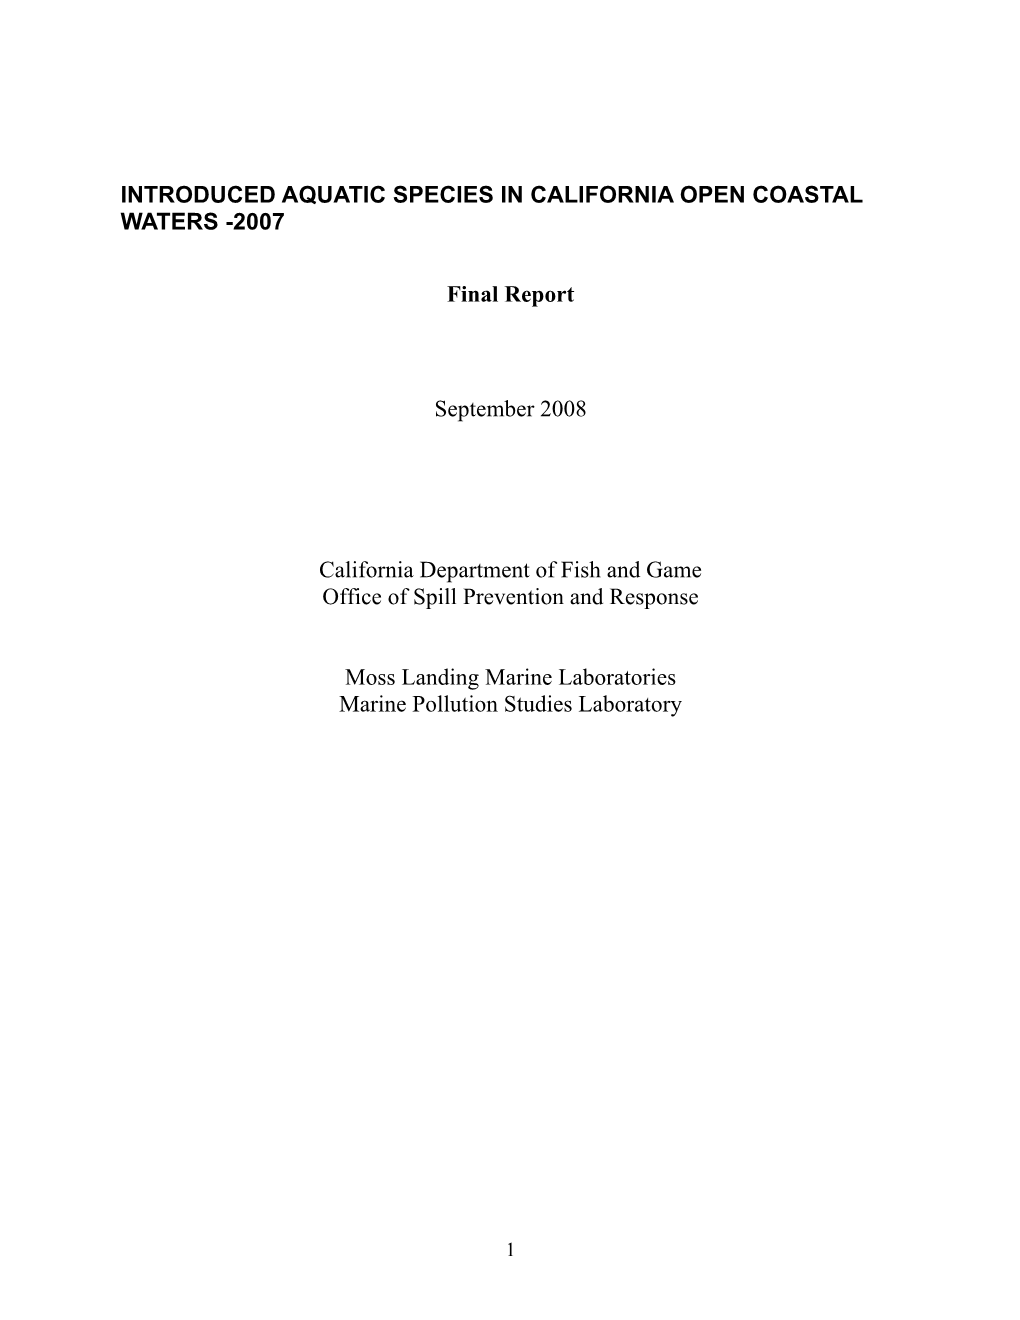 Introduced Aquatic Species in California Open Coastal Waters -2007